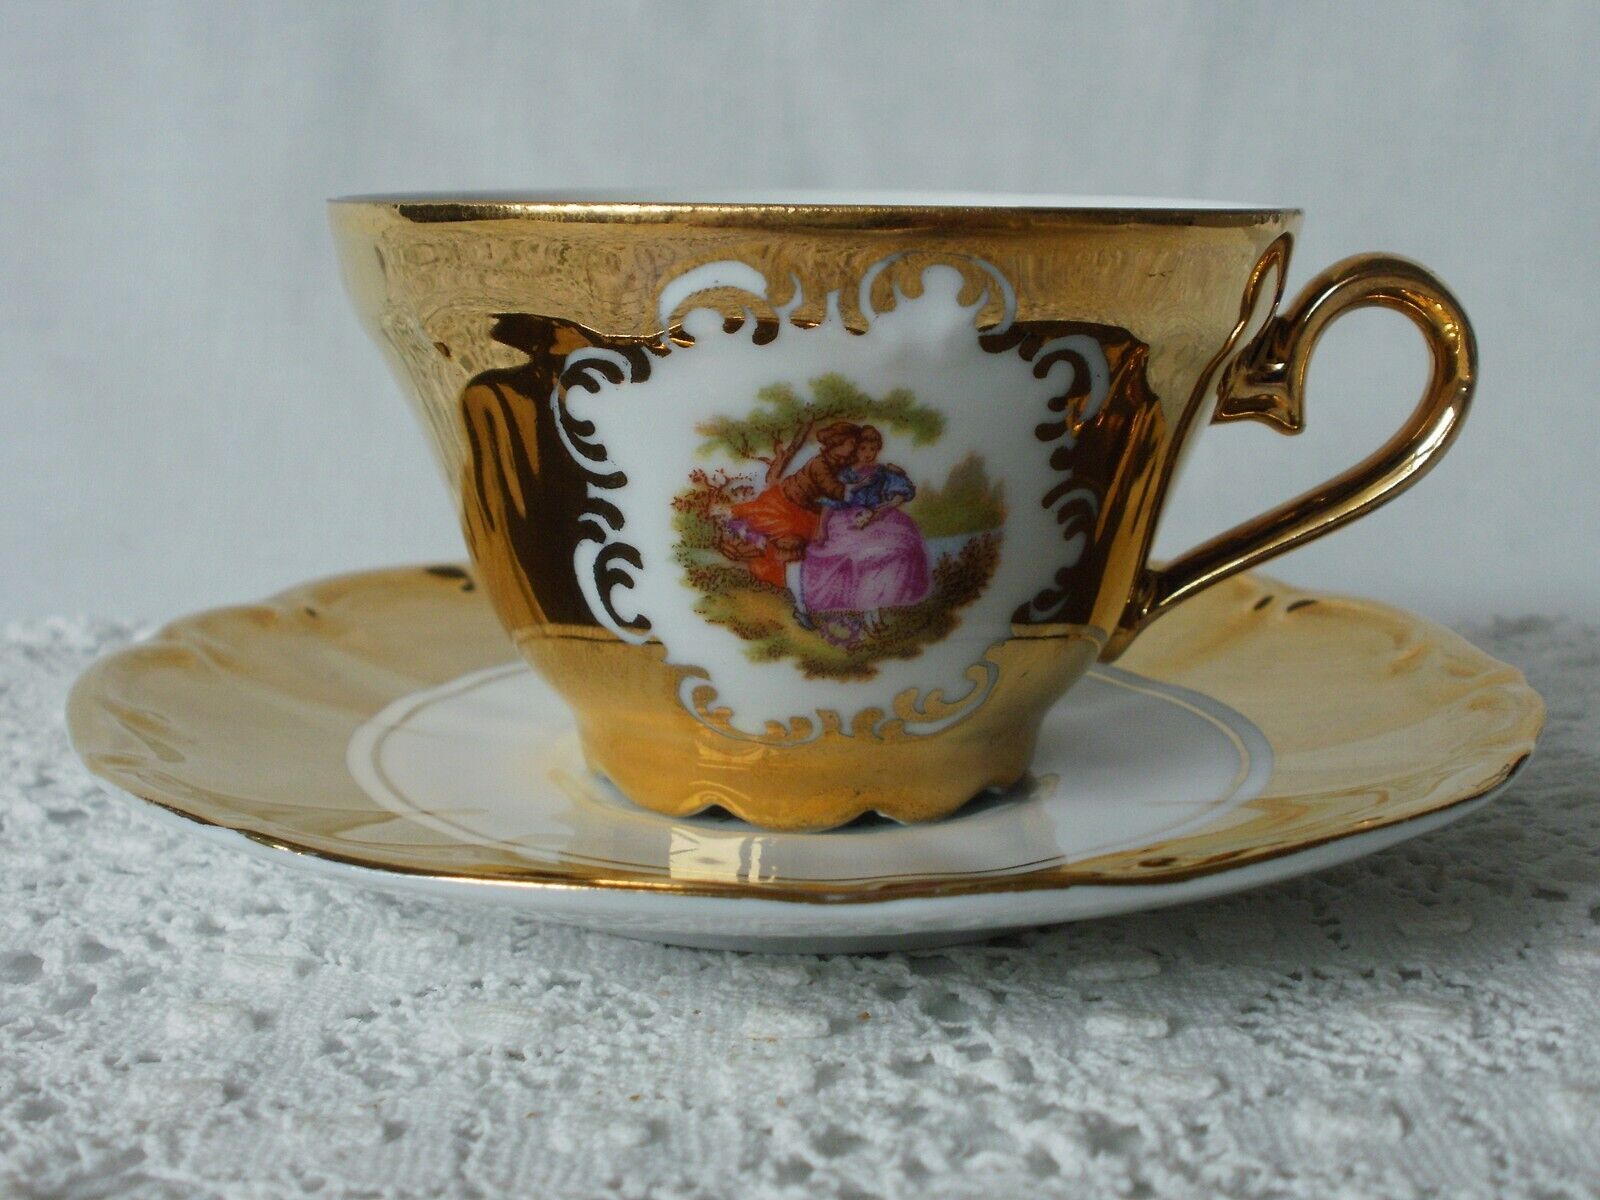 Gorgeous Vintage ST Bavaria Germany Tea Cup and Saucer Porcelain Gold/White Trim